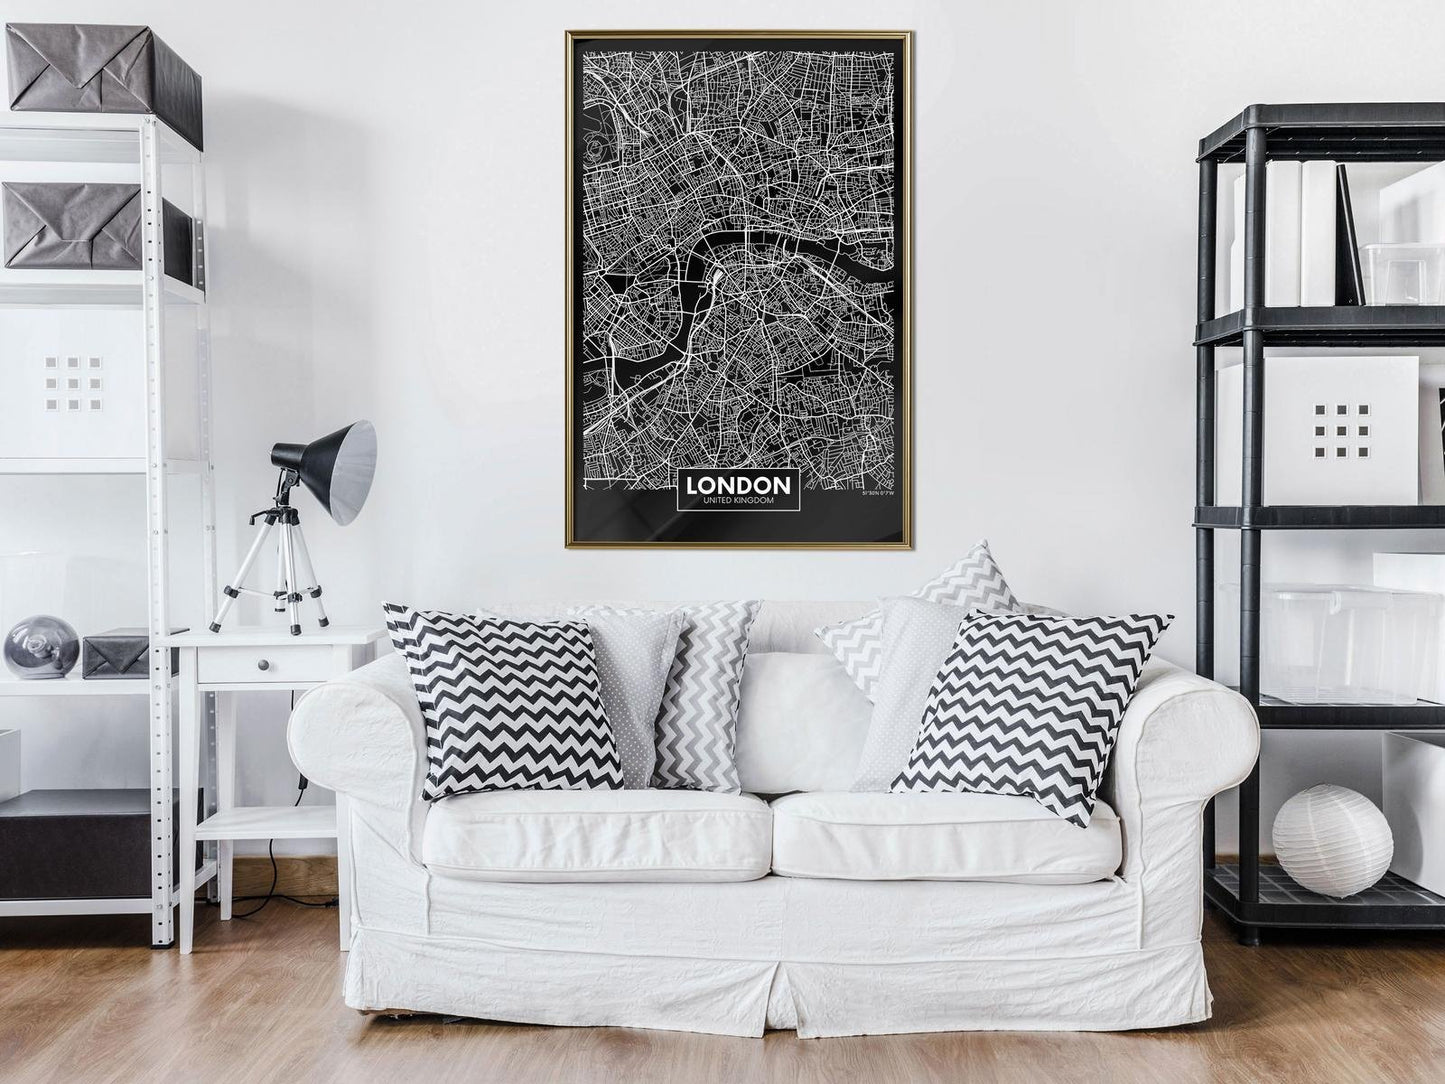 Stadtplan: London (dunkel)